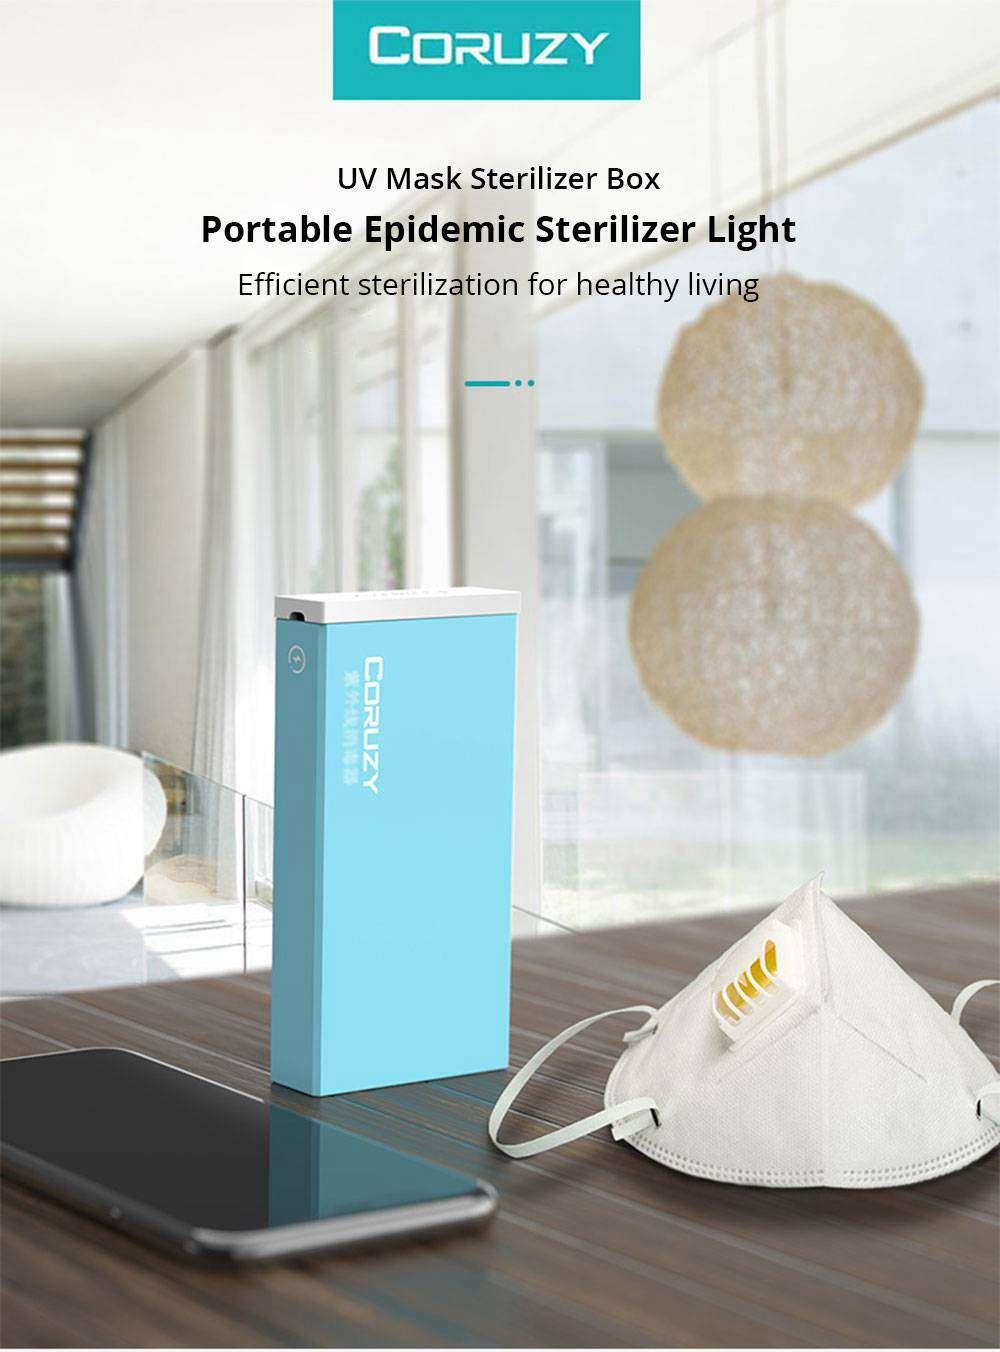 CORUZY Portable Disinfection Box: Efficient UV Sterilization For Smartphone at Discounted Price